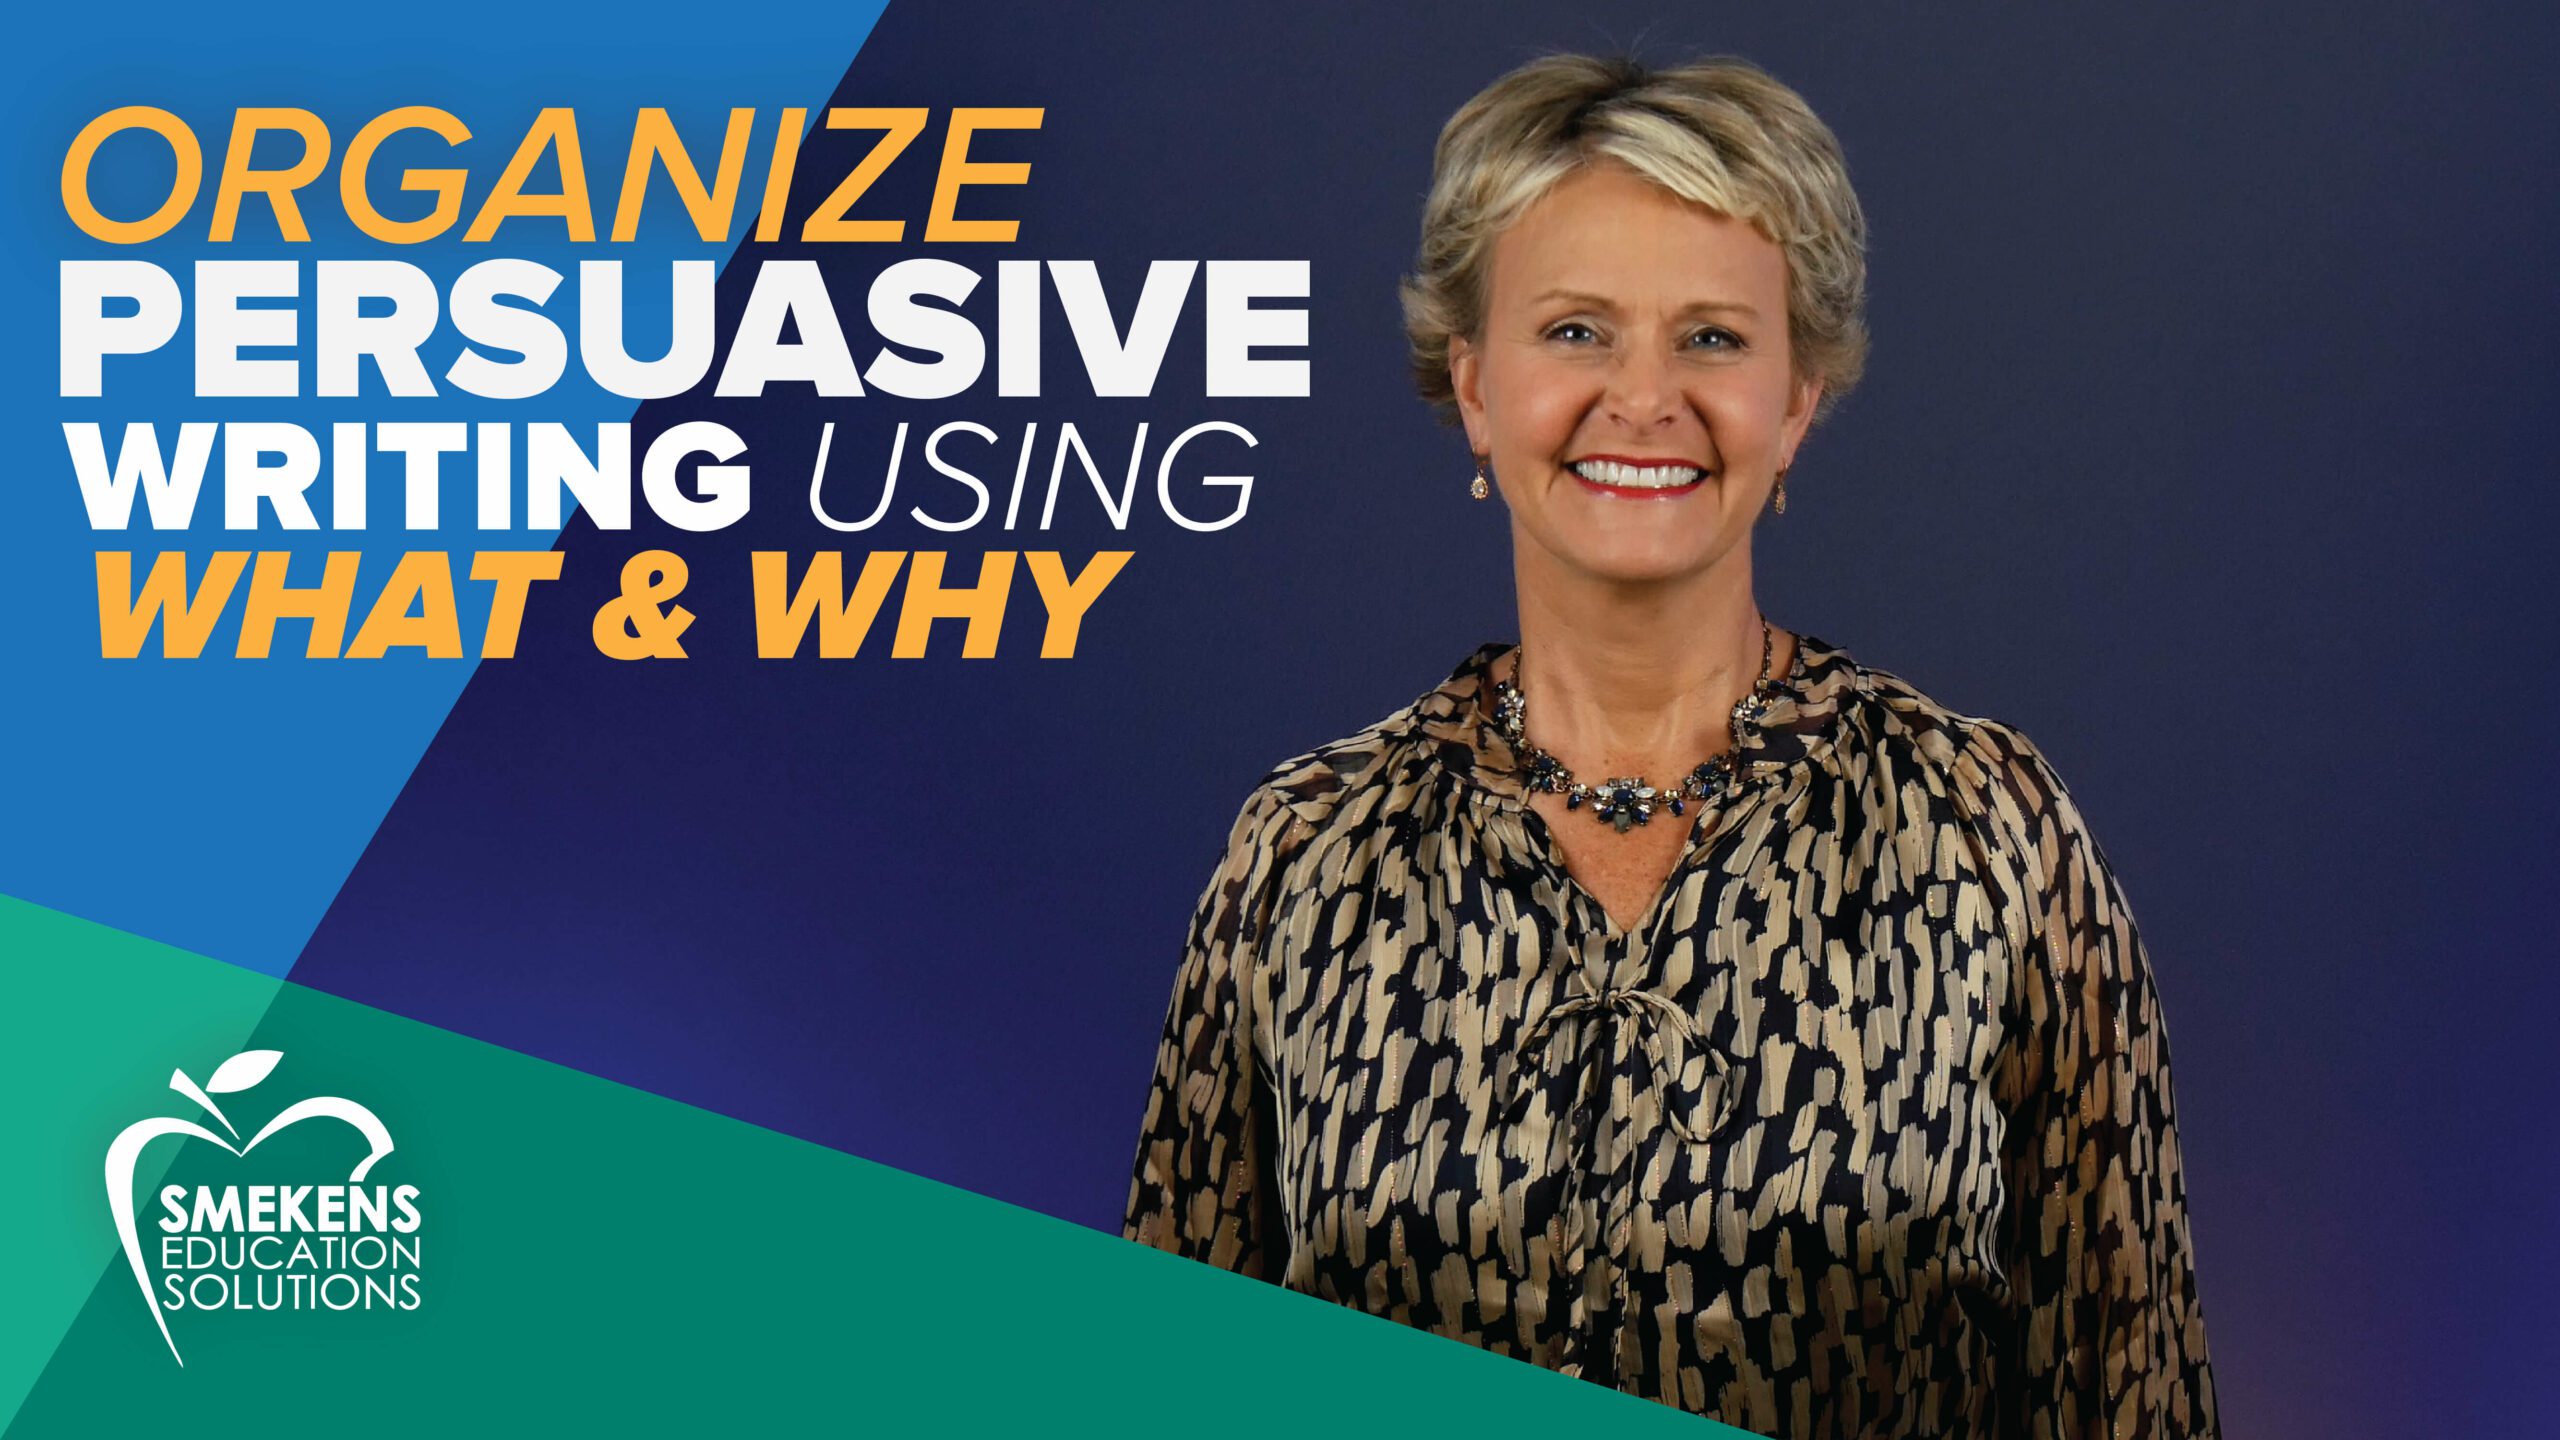 Organize persuasive writing using What & Why